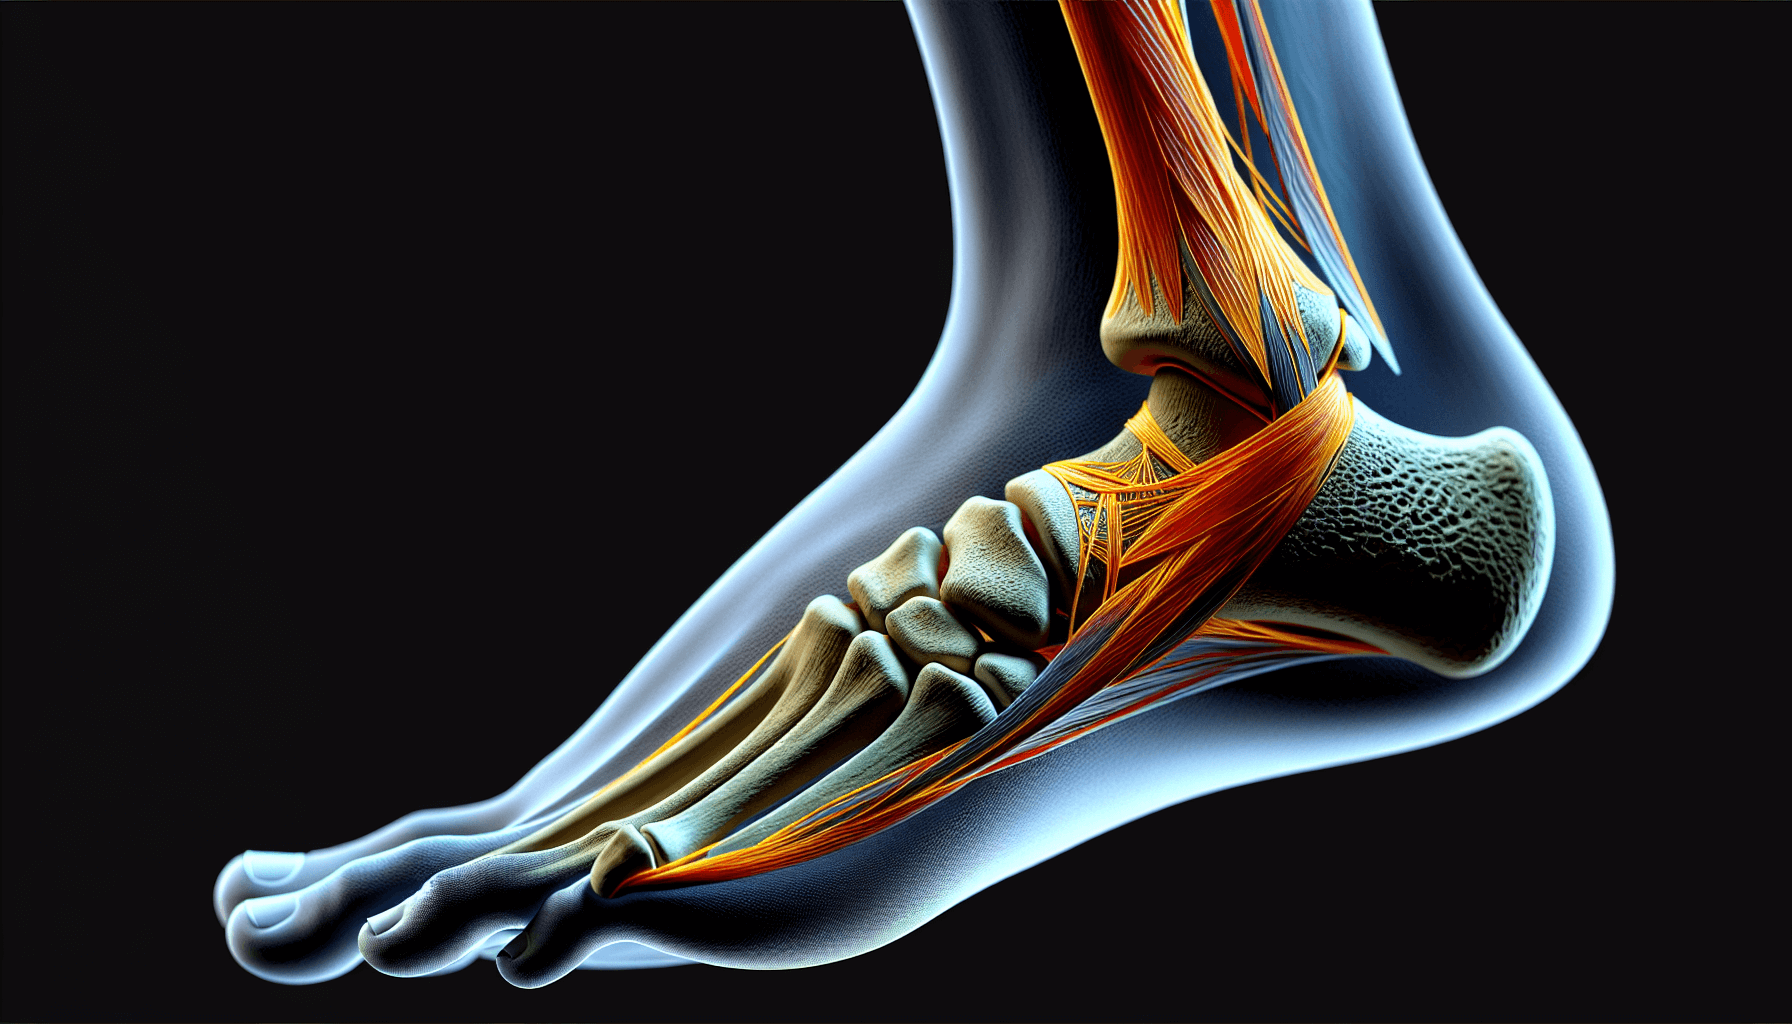 Achilles tendon anatomy illustration